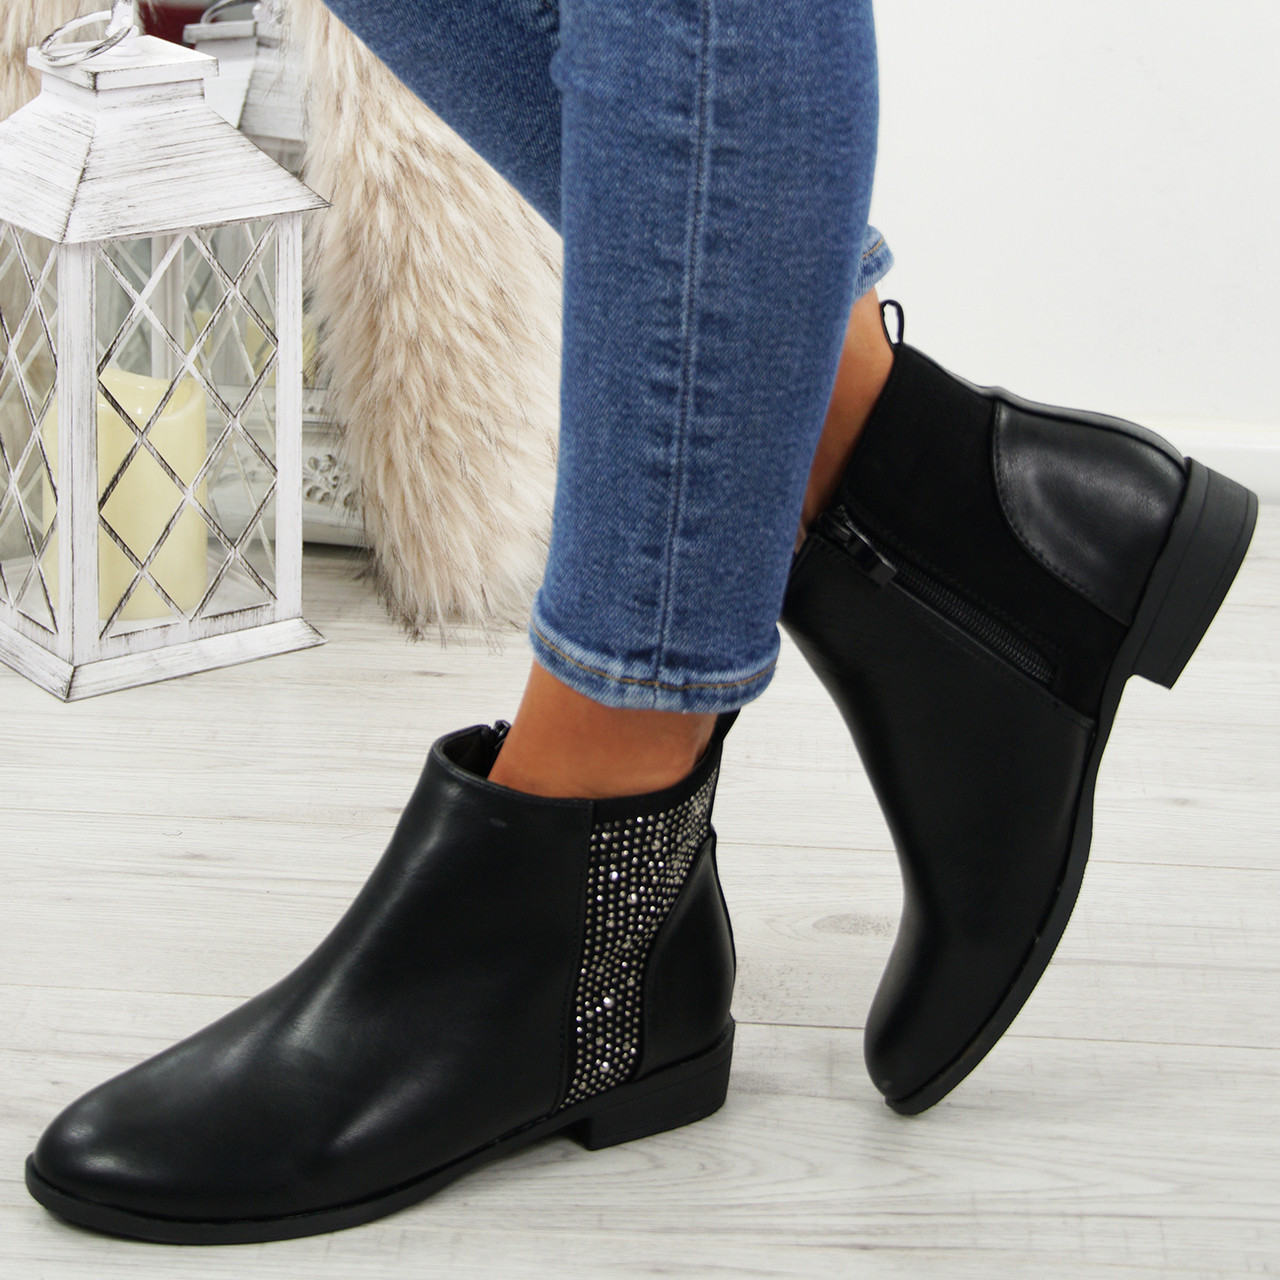 ladies black ankle boots uk